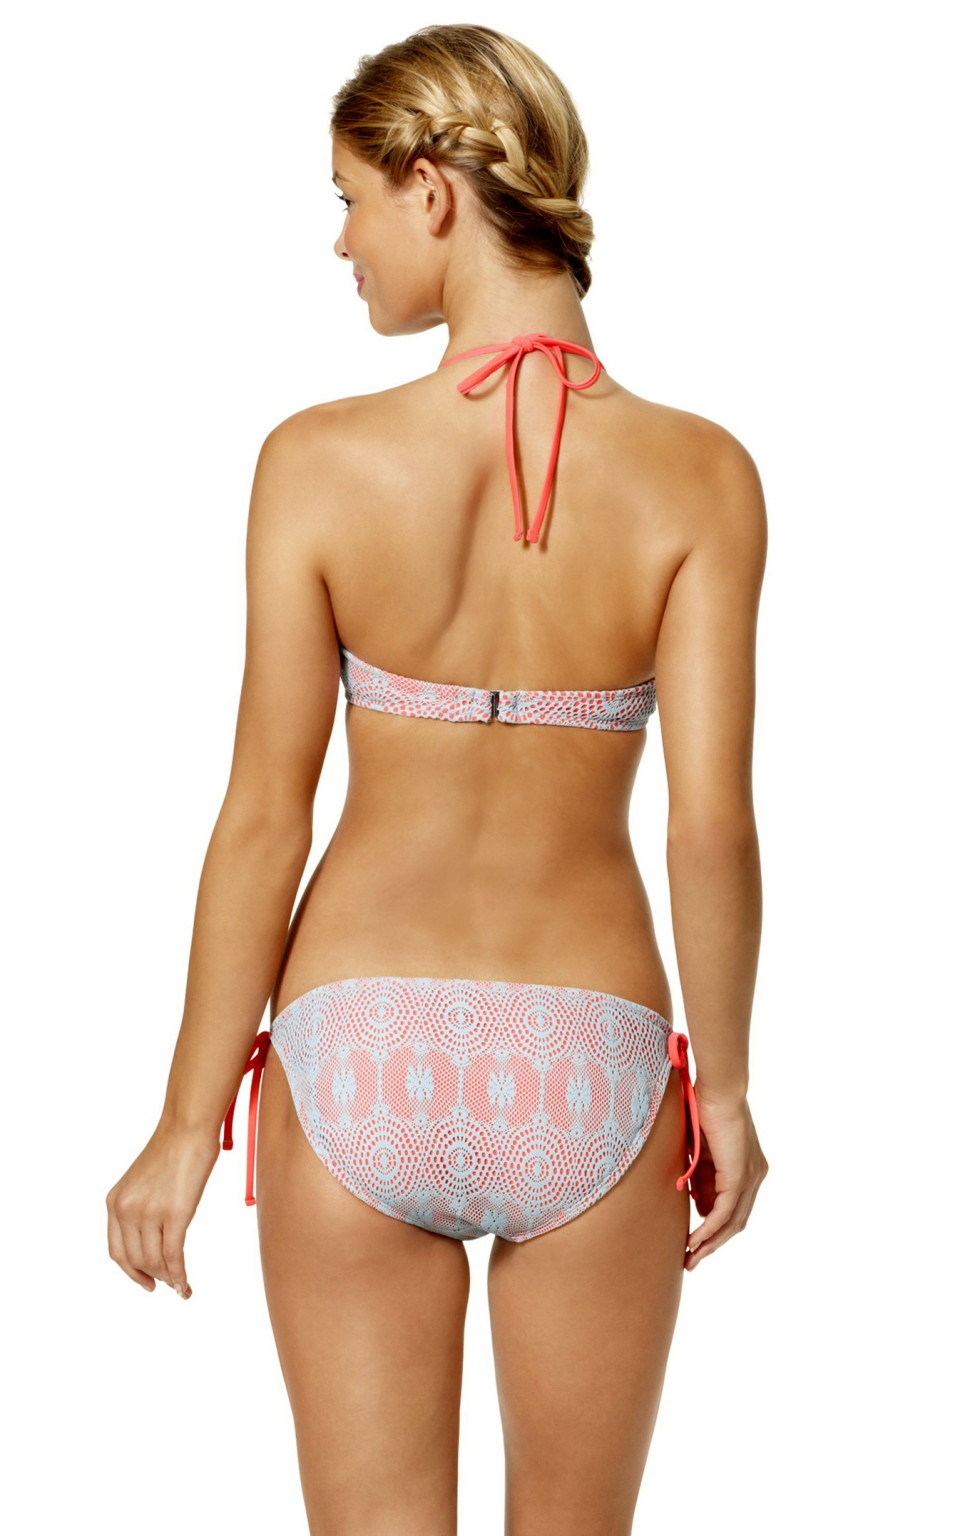 Danielle knudson posant dans un bikini cible sexy collection 2015
 #75168940